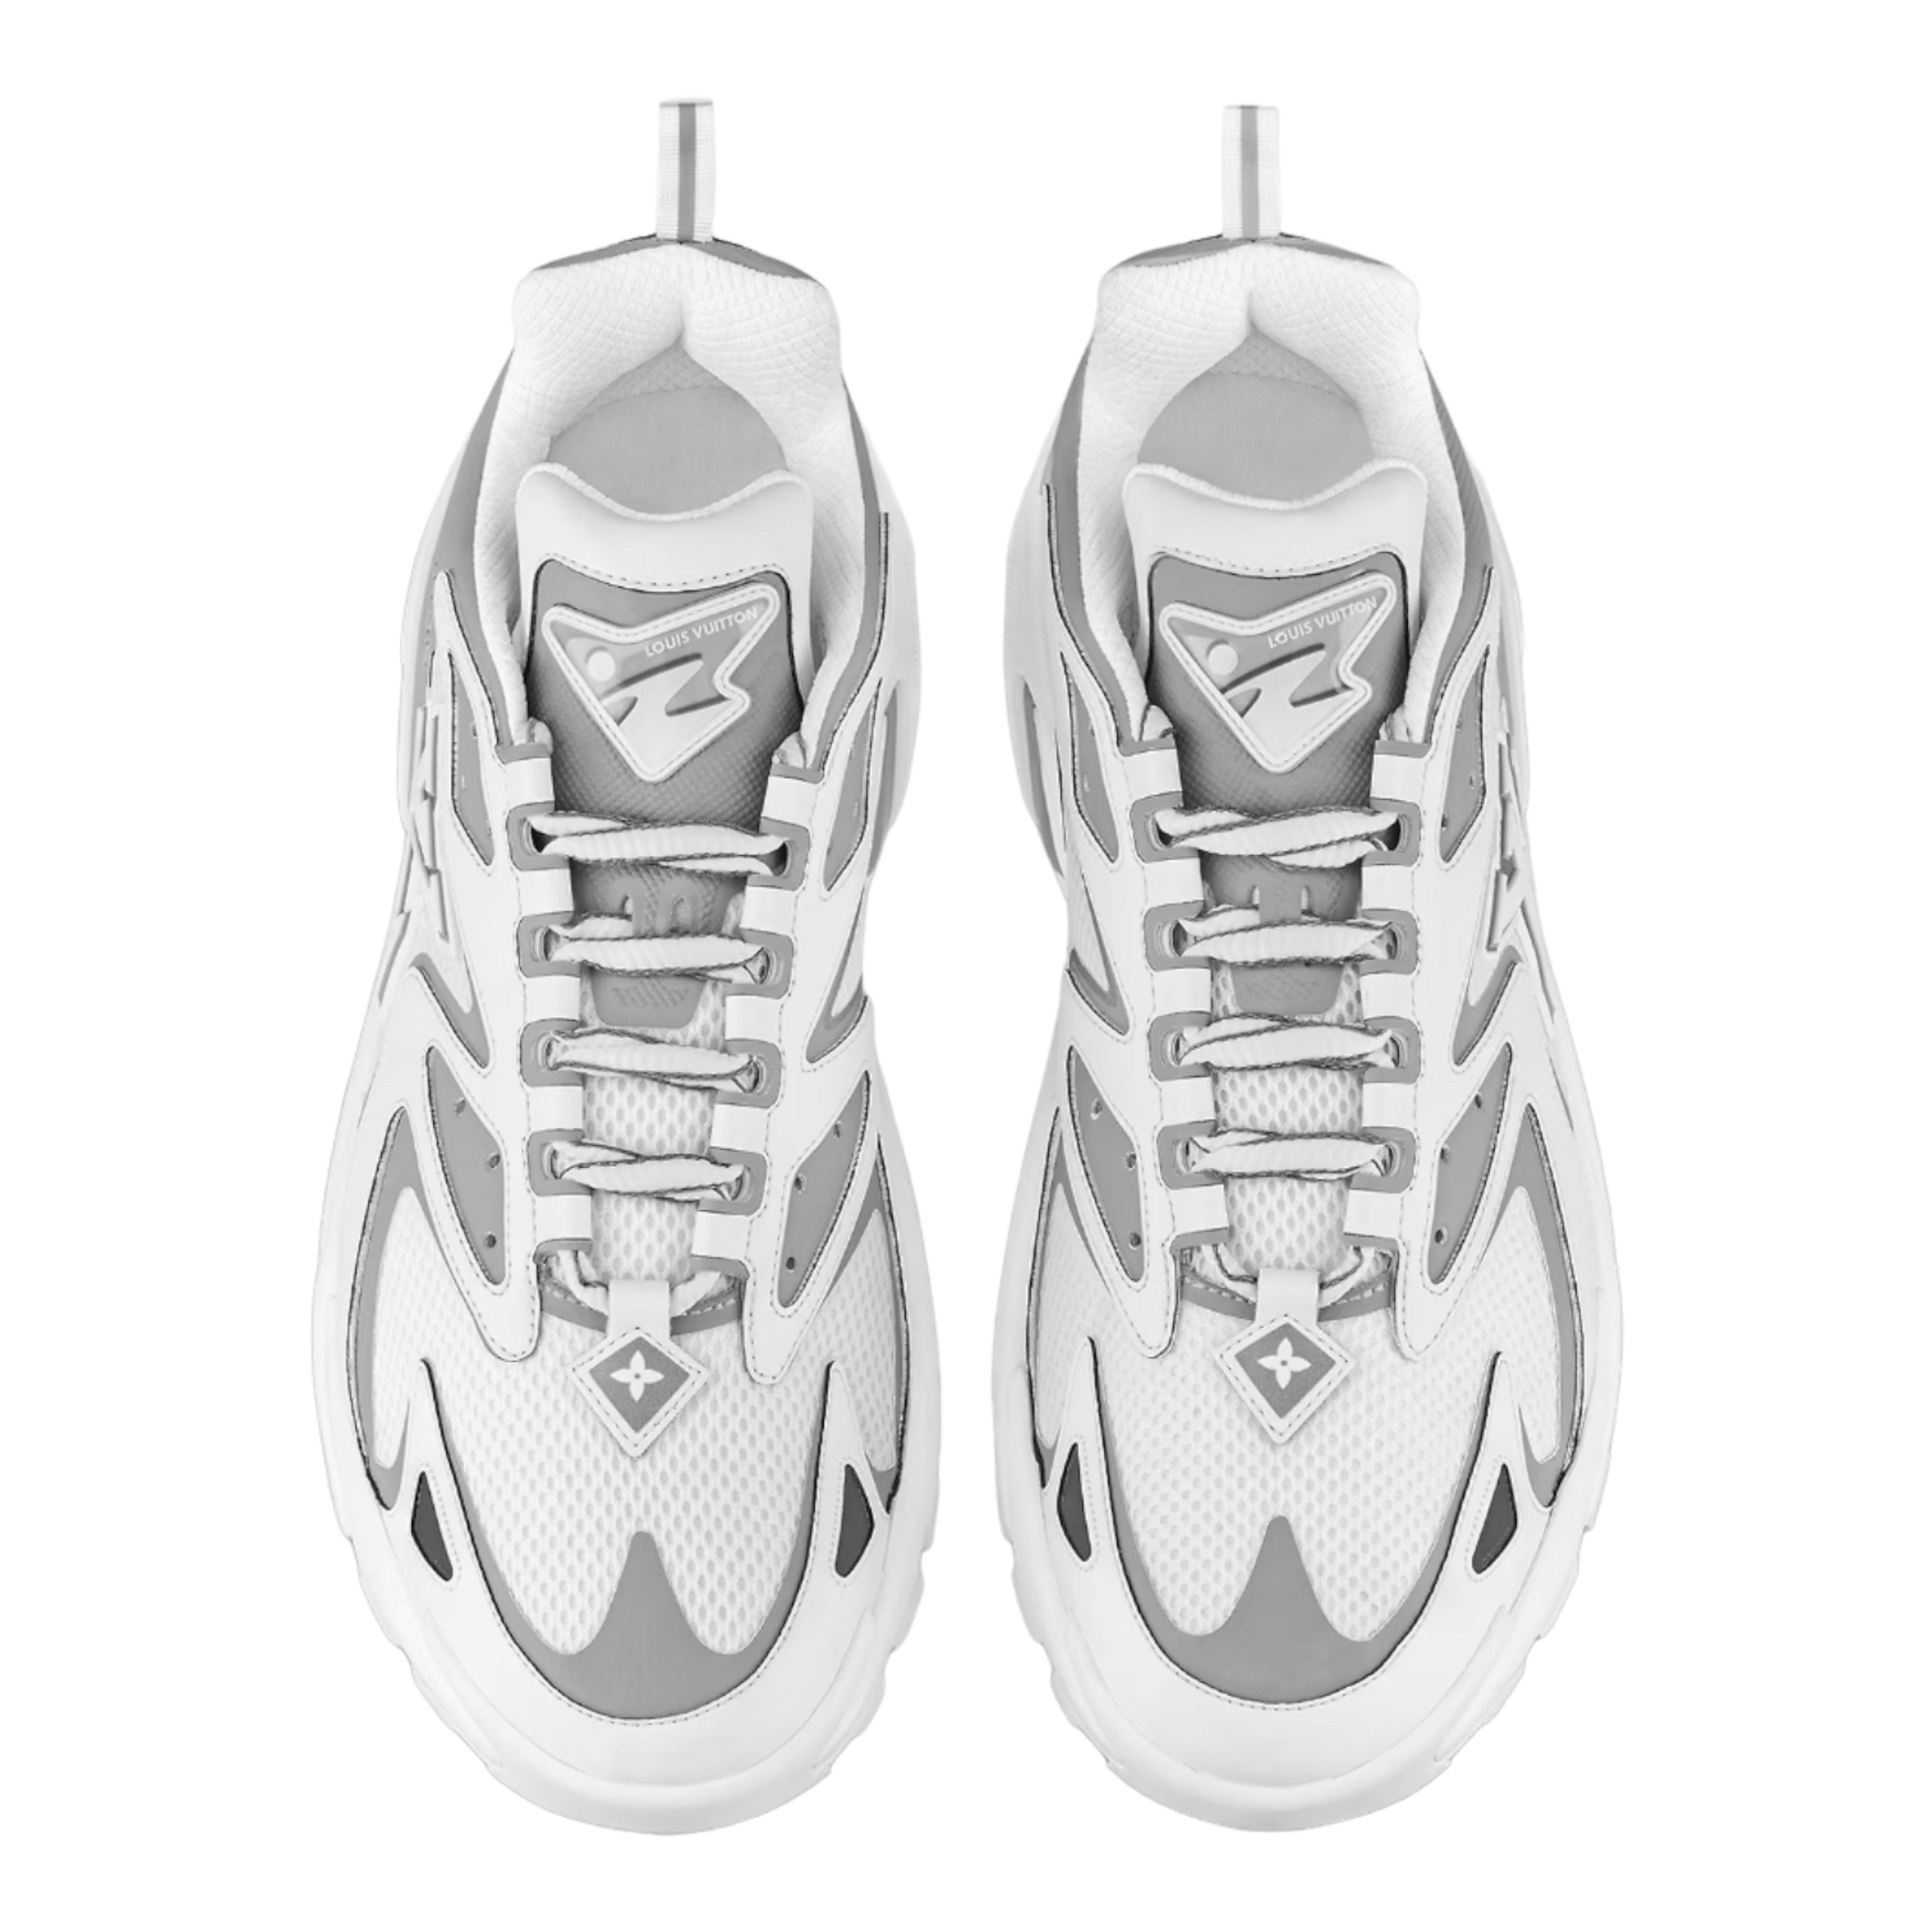 Alternate View 1 of Louis Vuitton Runner Tatic Sneaker White Grey